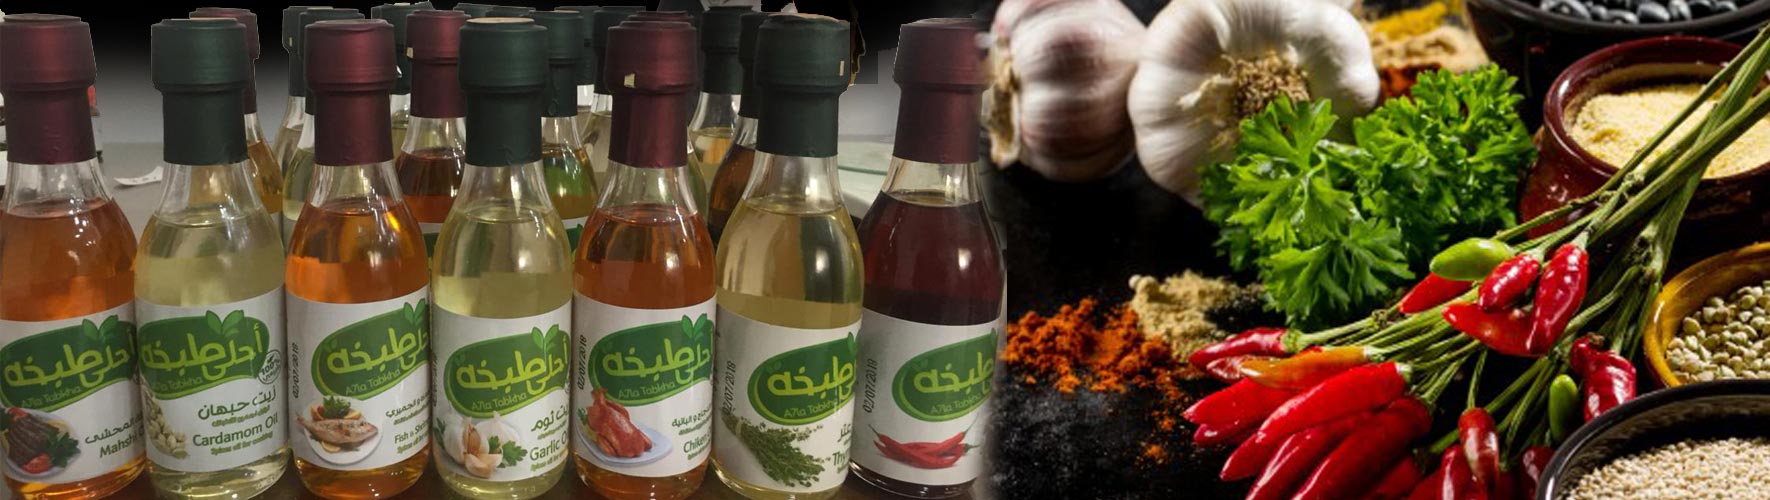 Sakkara Spices oils